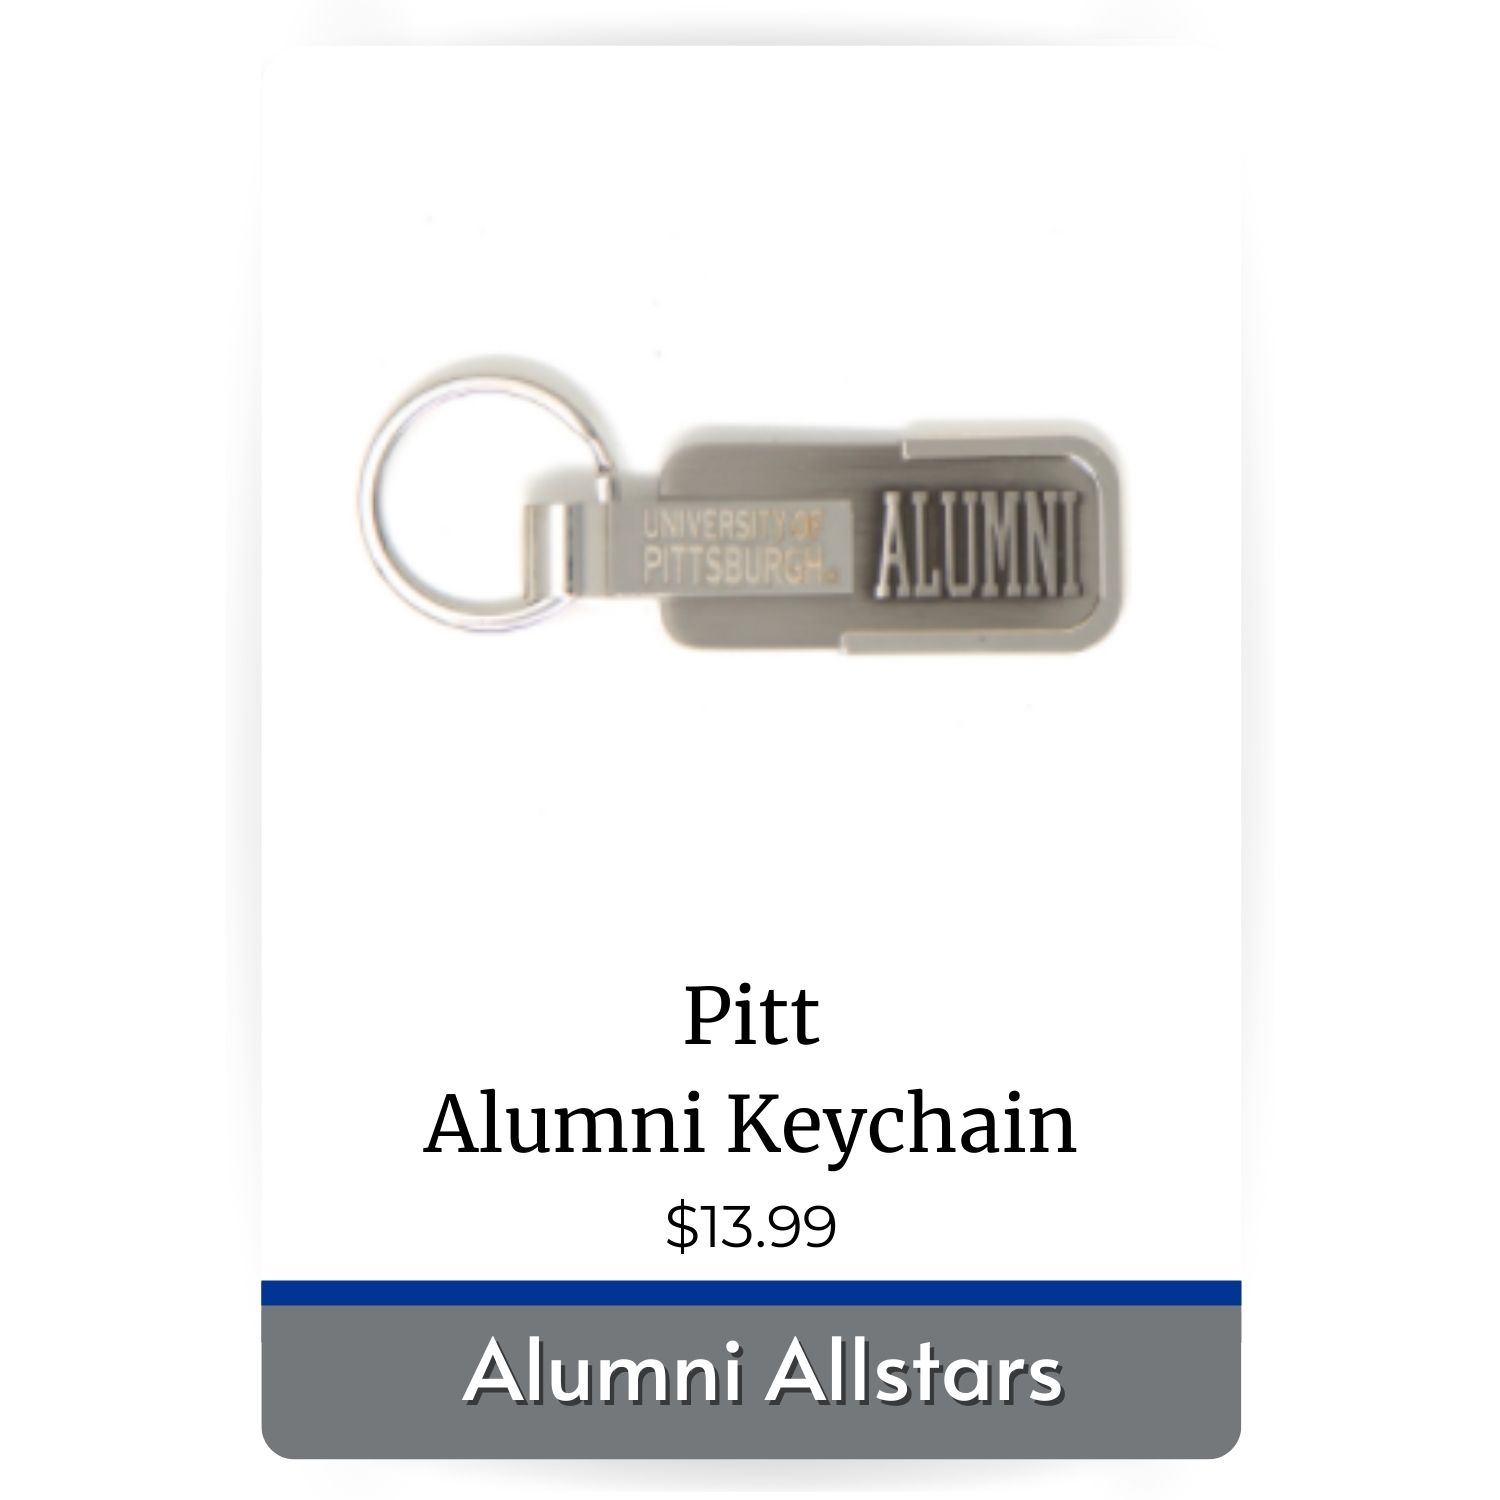 Pitt Alumni Keychain featured product image